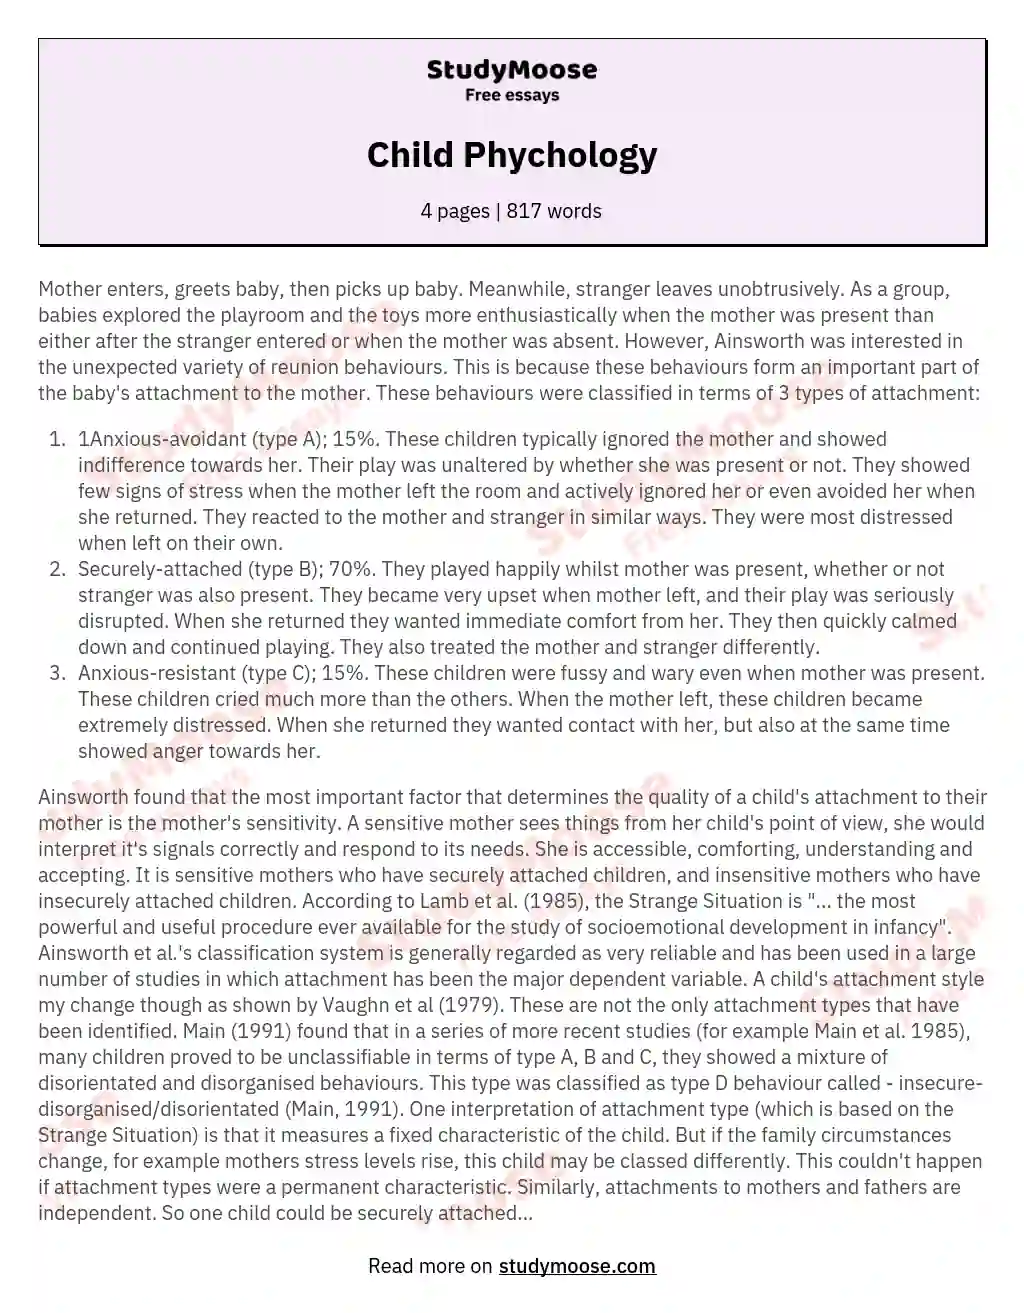 Child Phychology essay